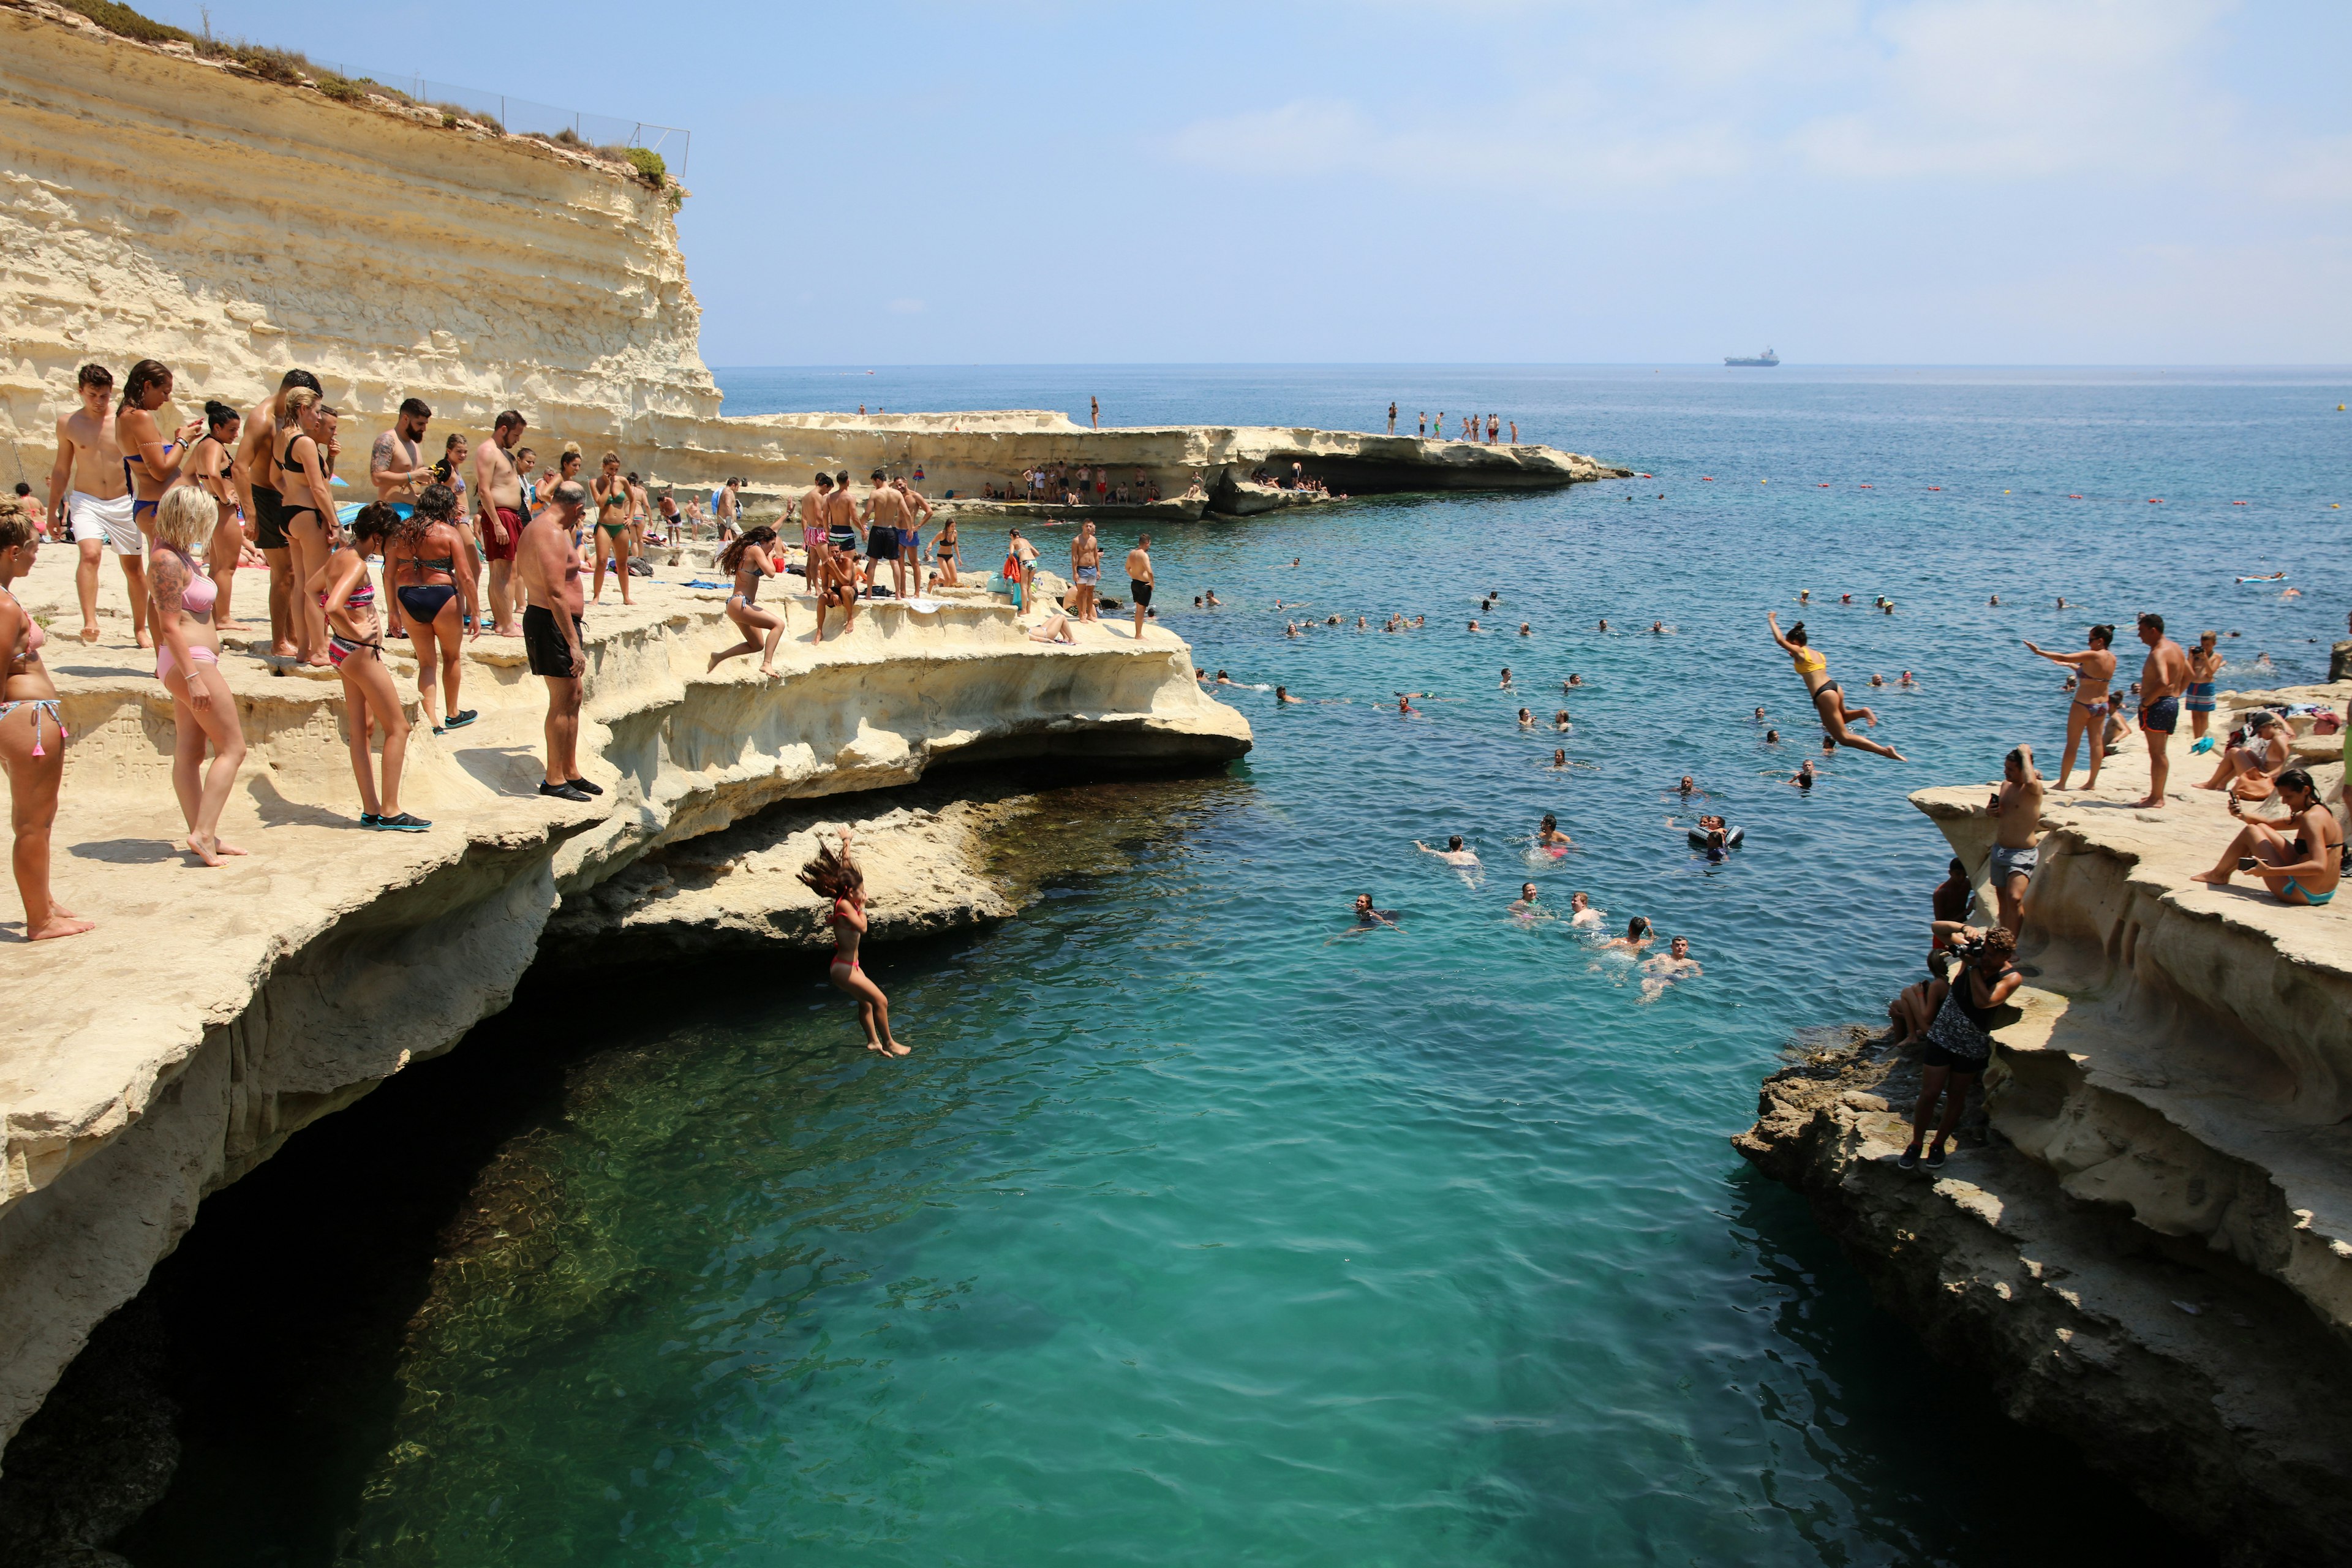 People jumping into the deep waters at St Peter's Pool near Marsaxlokk, Malta